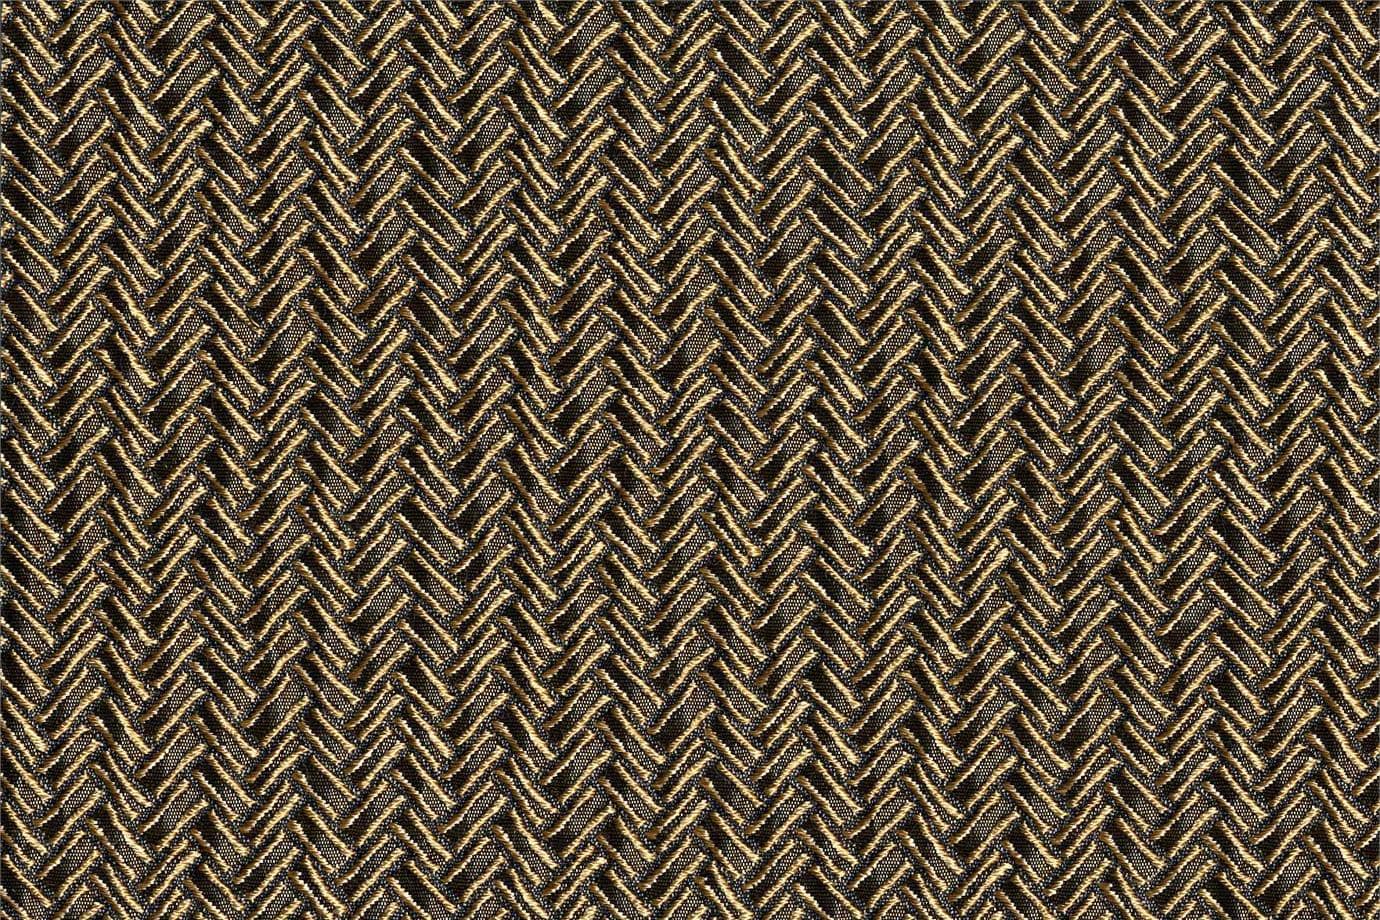 J1951 SECONDIGLIANO 008 Mandorla home decoration fabric